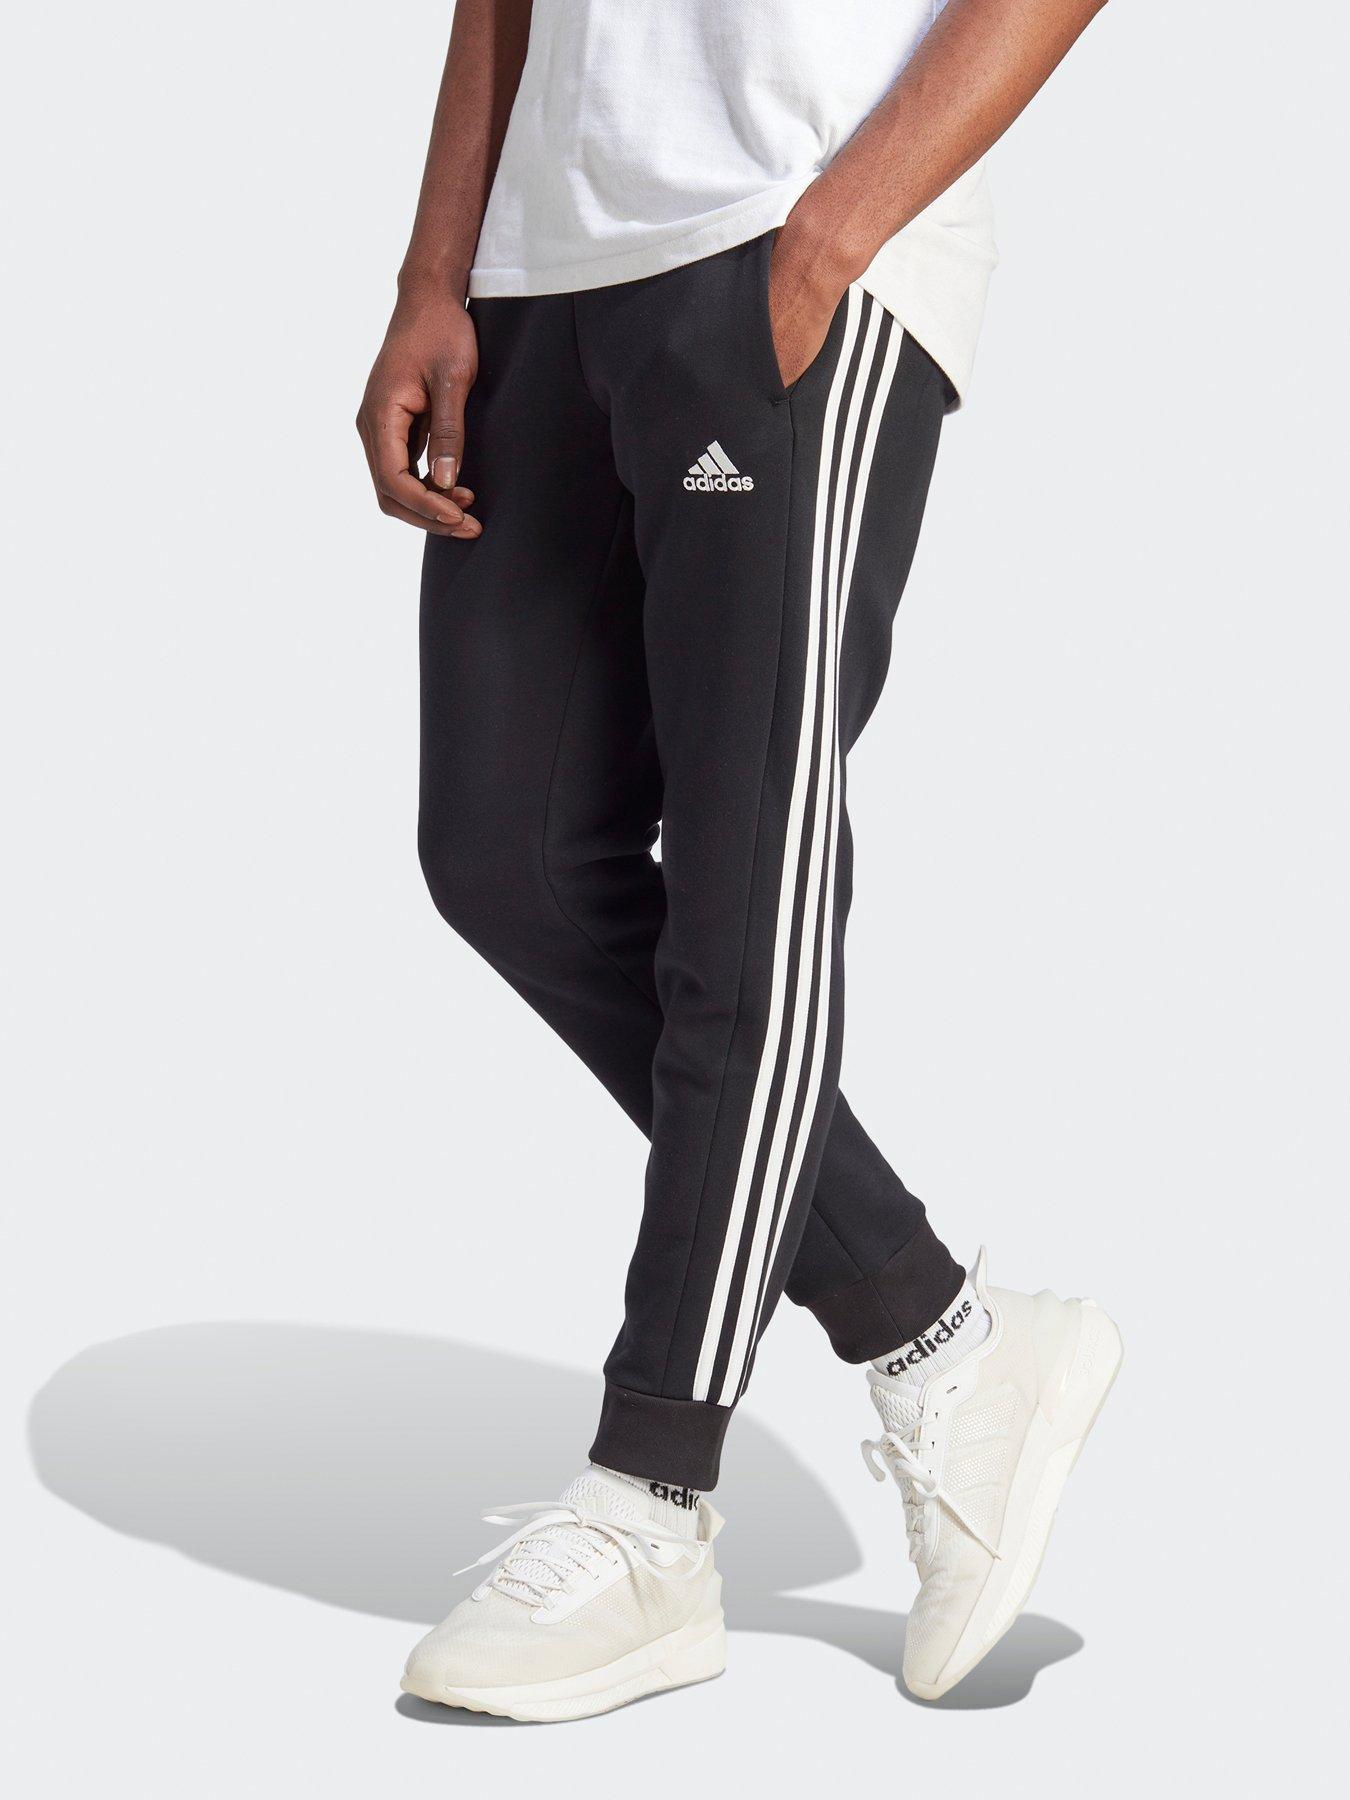 Adidas Loose Fit Track Pants Tracksuit Bototms Size M Unisex Black